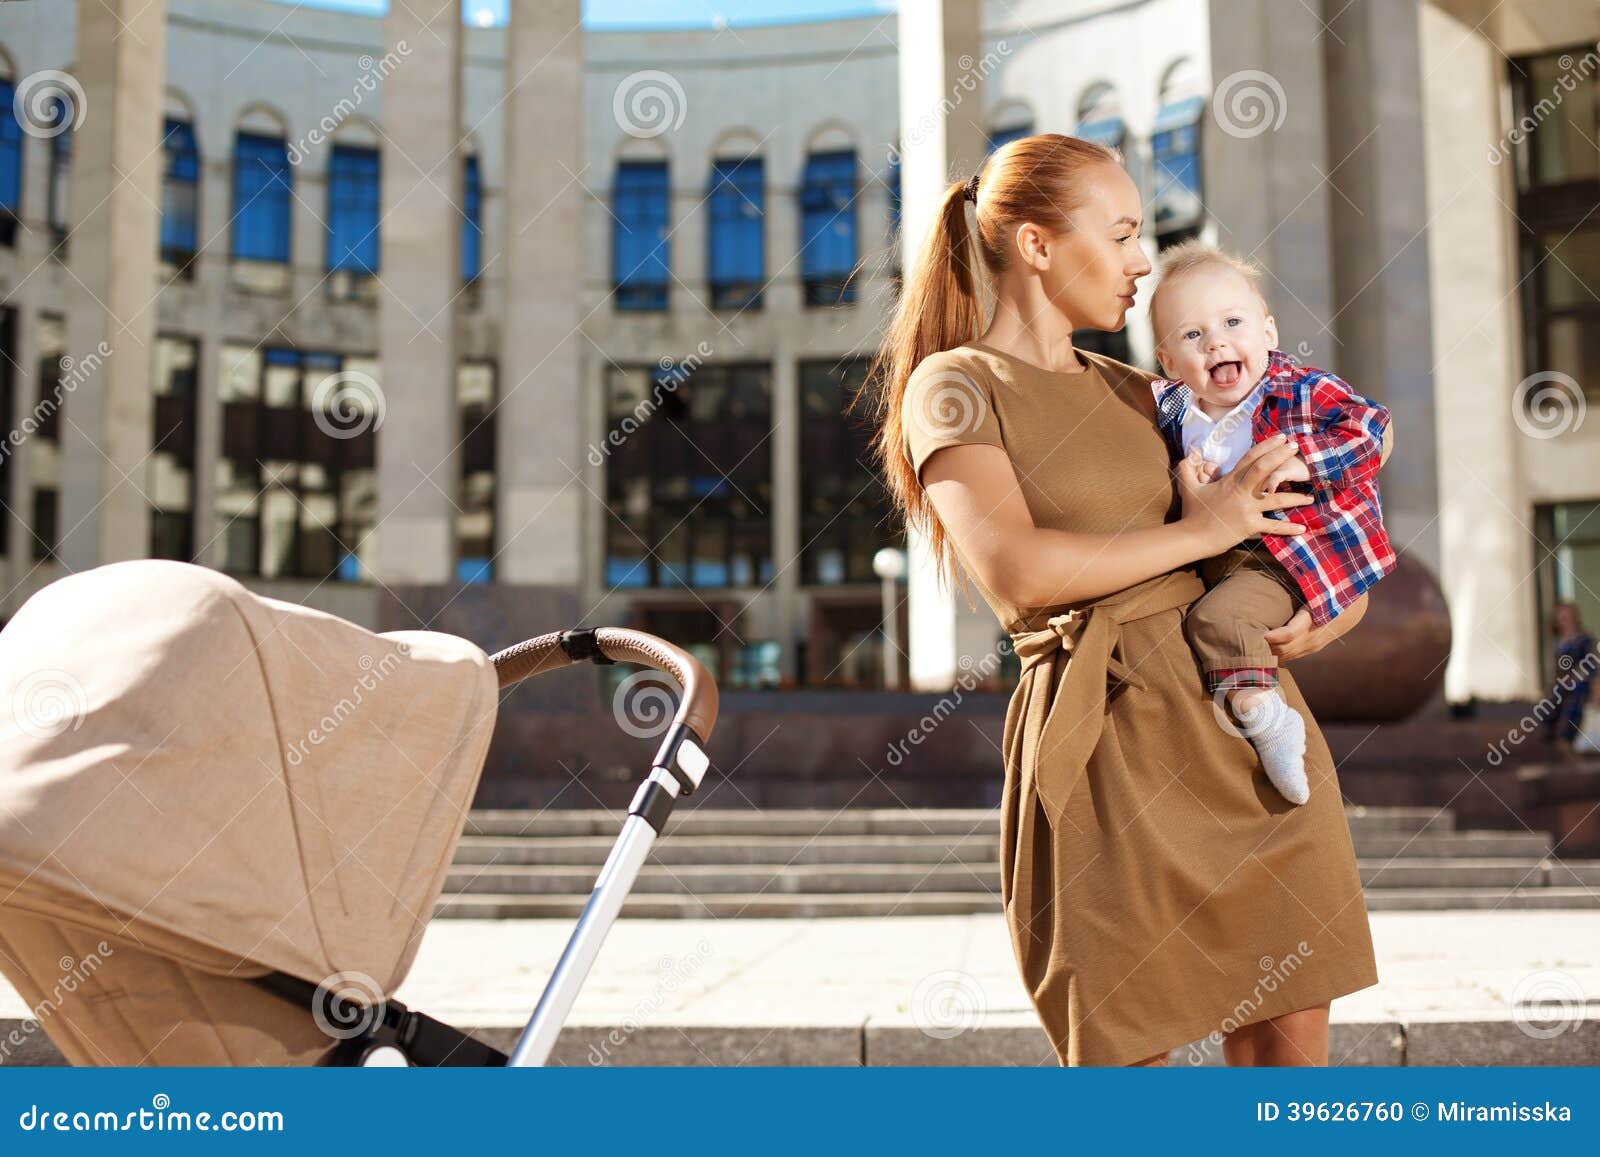 fashionable-modern-mother-city-street-pram-young-mo-trendy-walks-child-beautiful-women-child-39626760.jpg